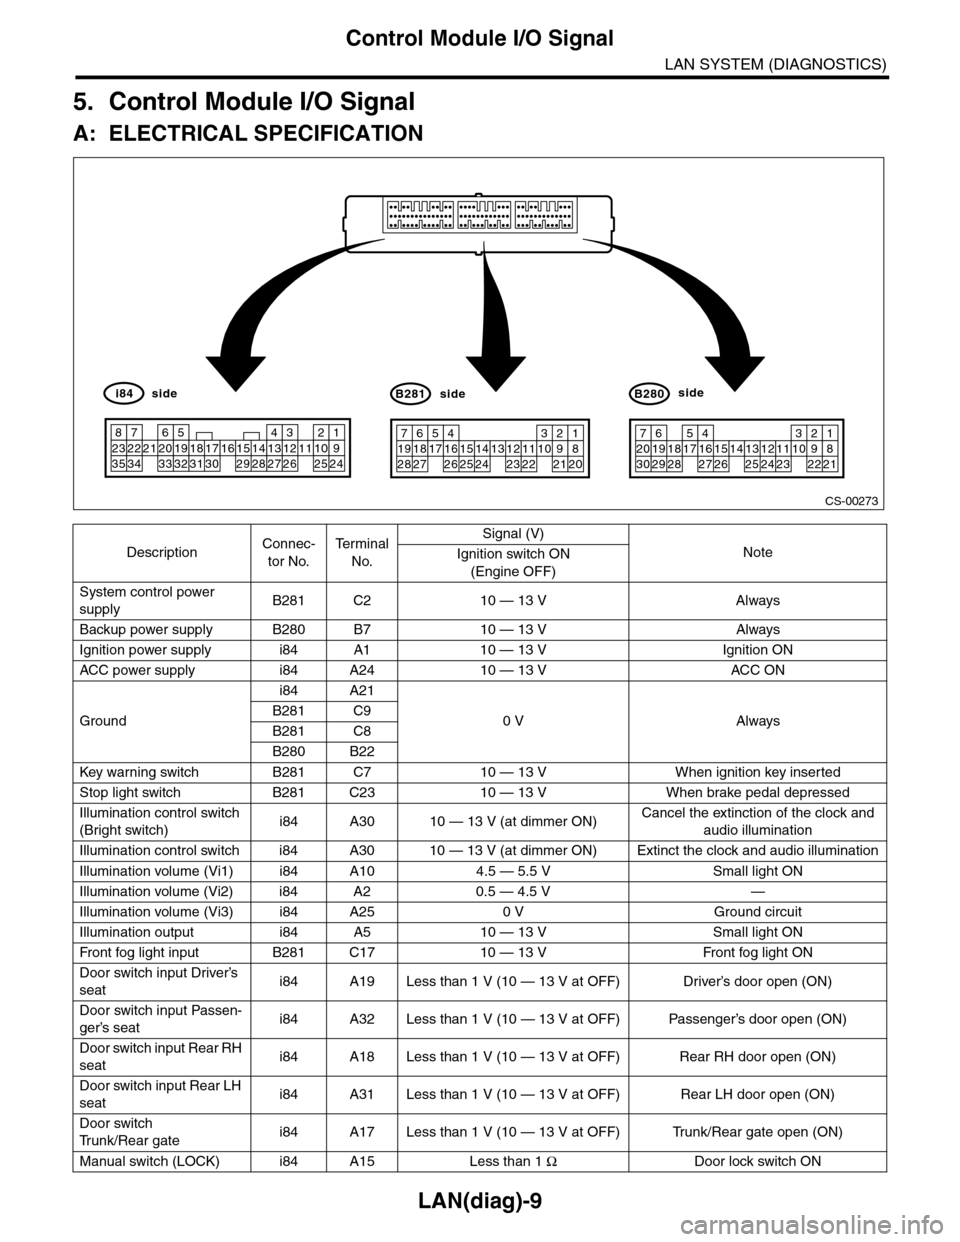 SUBARU TRIBECA 2009 1.G Service Workshop Manual LAN(diag)-9
Control Module I/O Signal
LAN SYSTEM (DIAGNOSTICS)
5. Control Module I/O Signal
A: ELECTRICAL SPECIFICATION
DescriptionConnec-
tor No.
Te r m i n a l  
No.
Signal (V)
NoteIgnition switch O